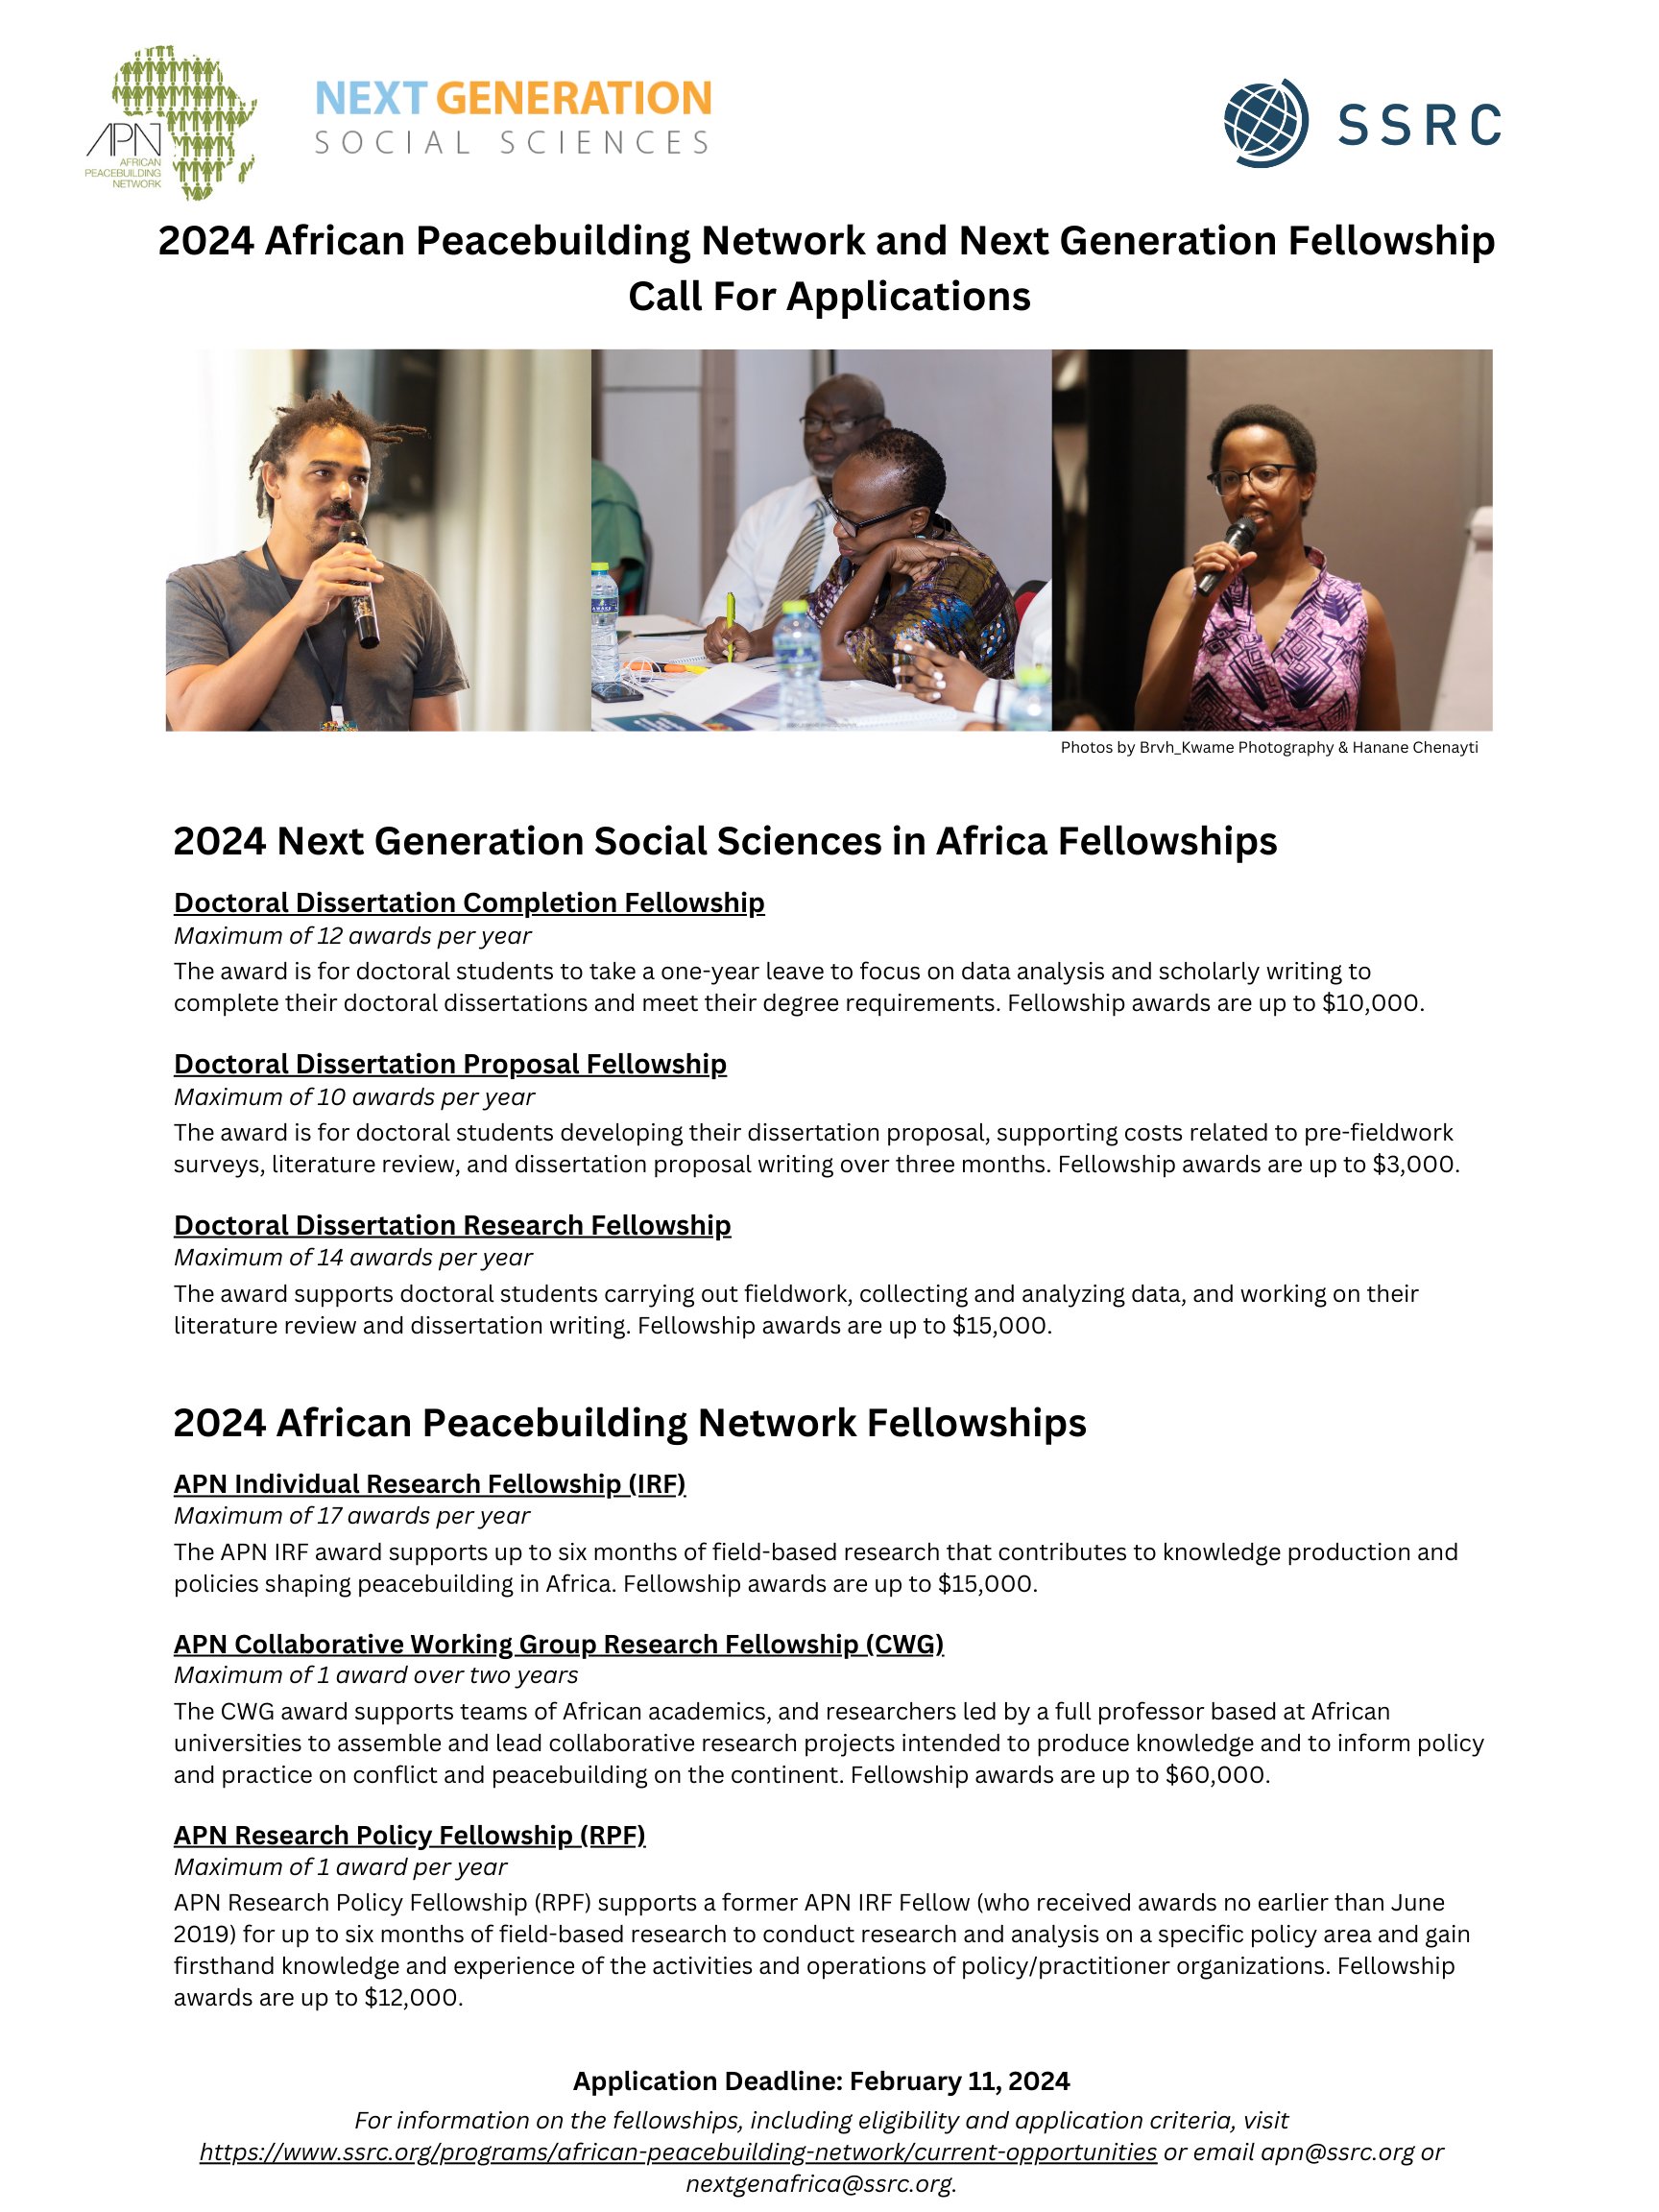 dissertation fellowships social science